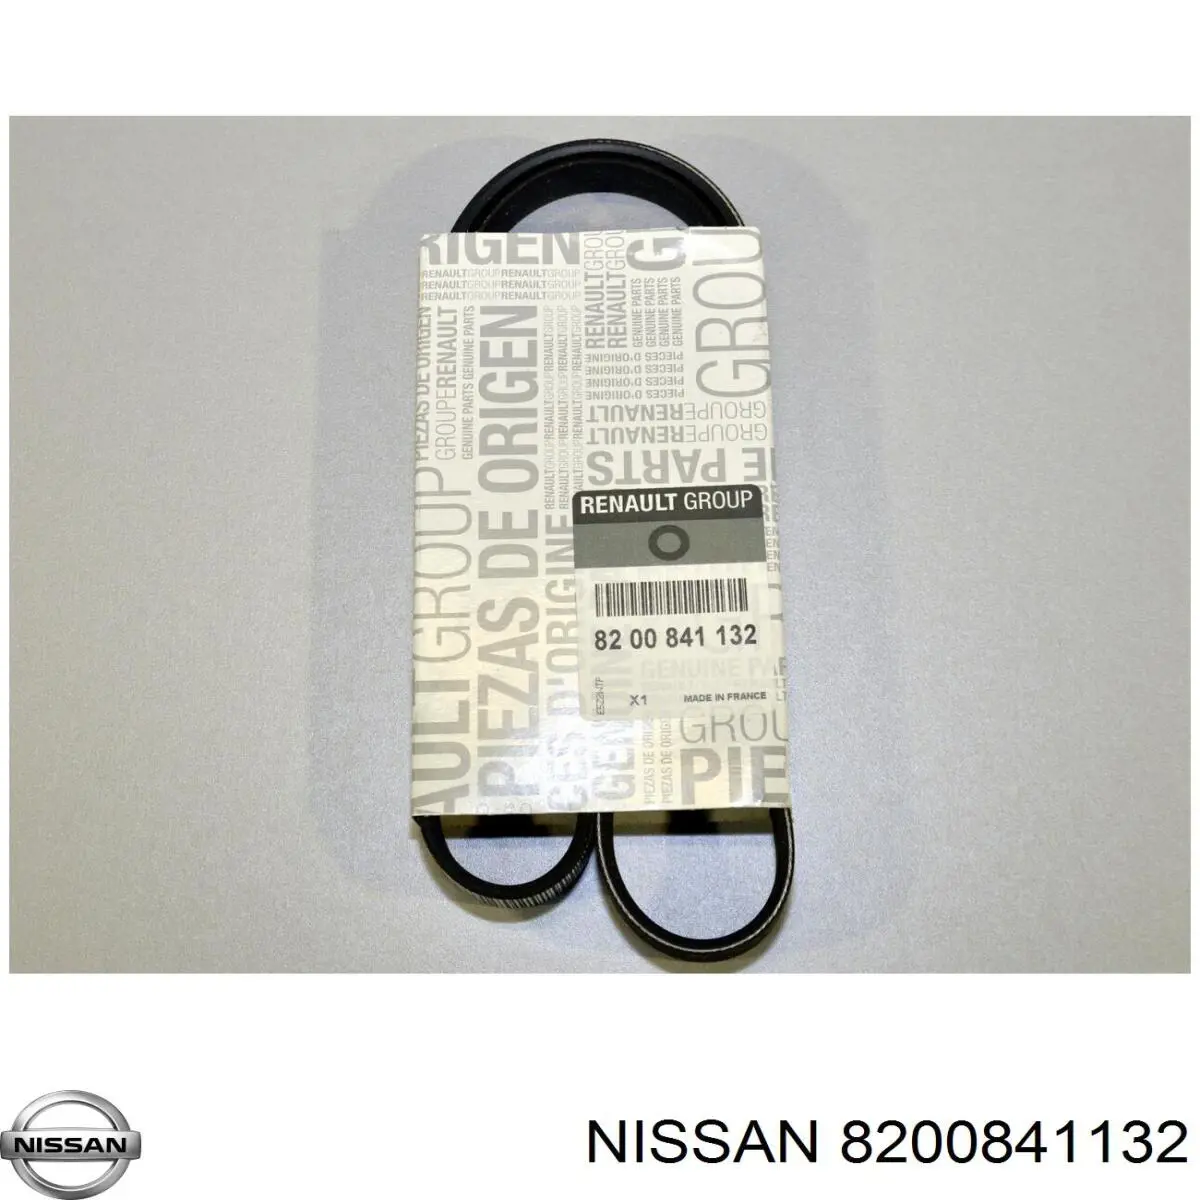 8200841132 Nissan correa trapezoidal